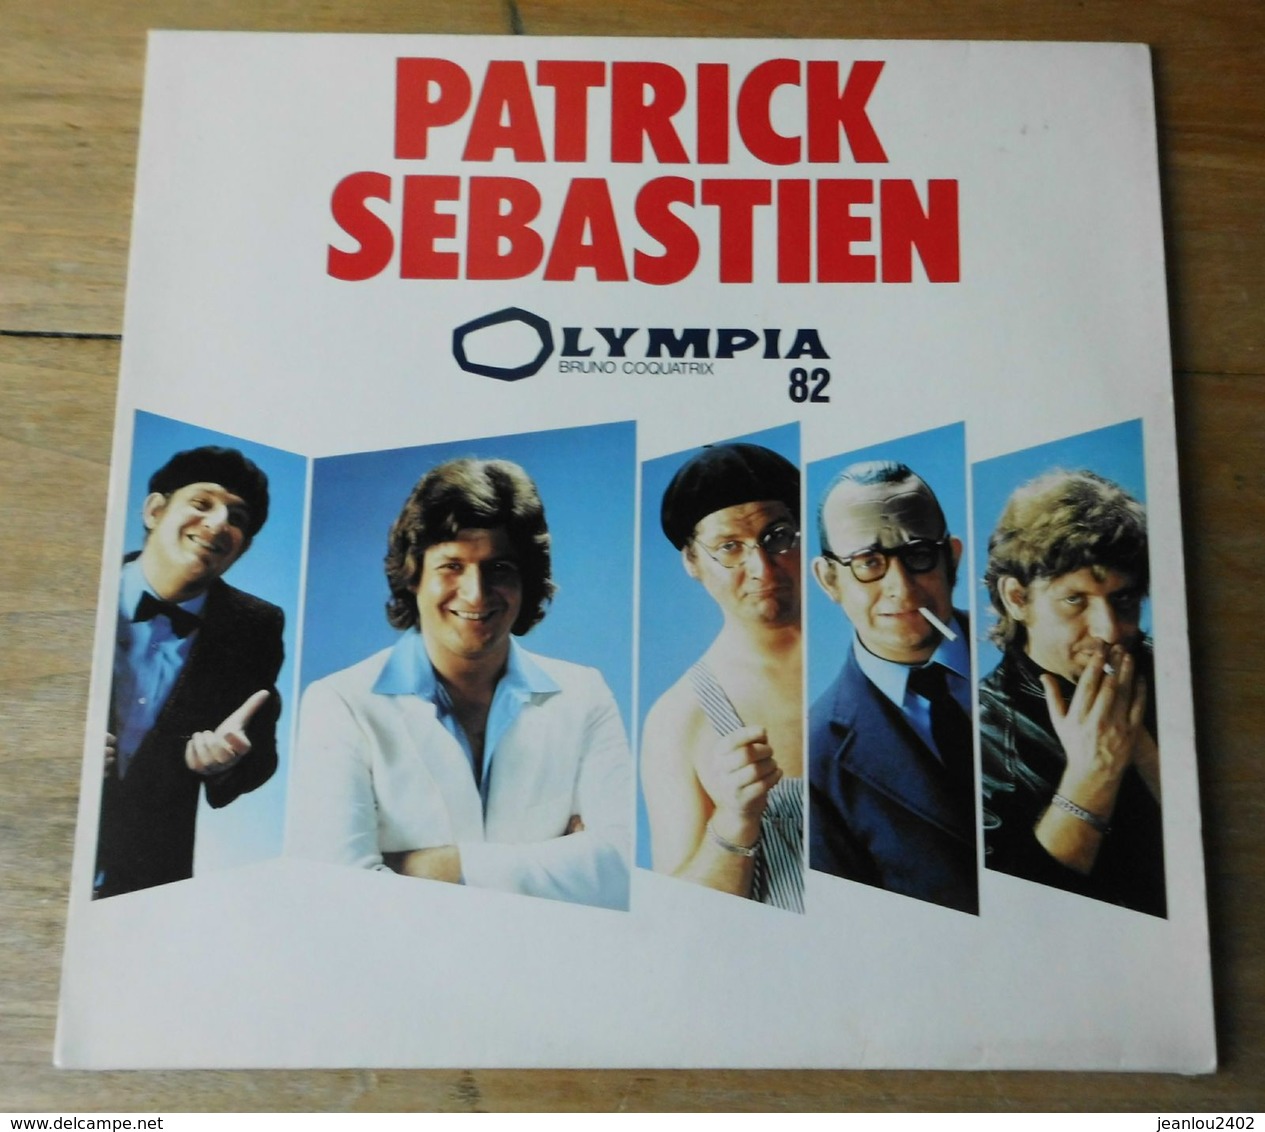 Vinyle "Patrick Sebastien" "Olympia 82" - Comiques, Cabaret